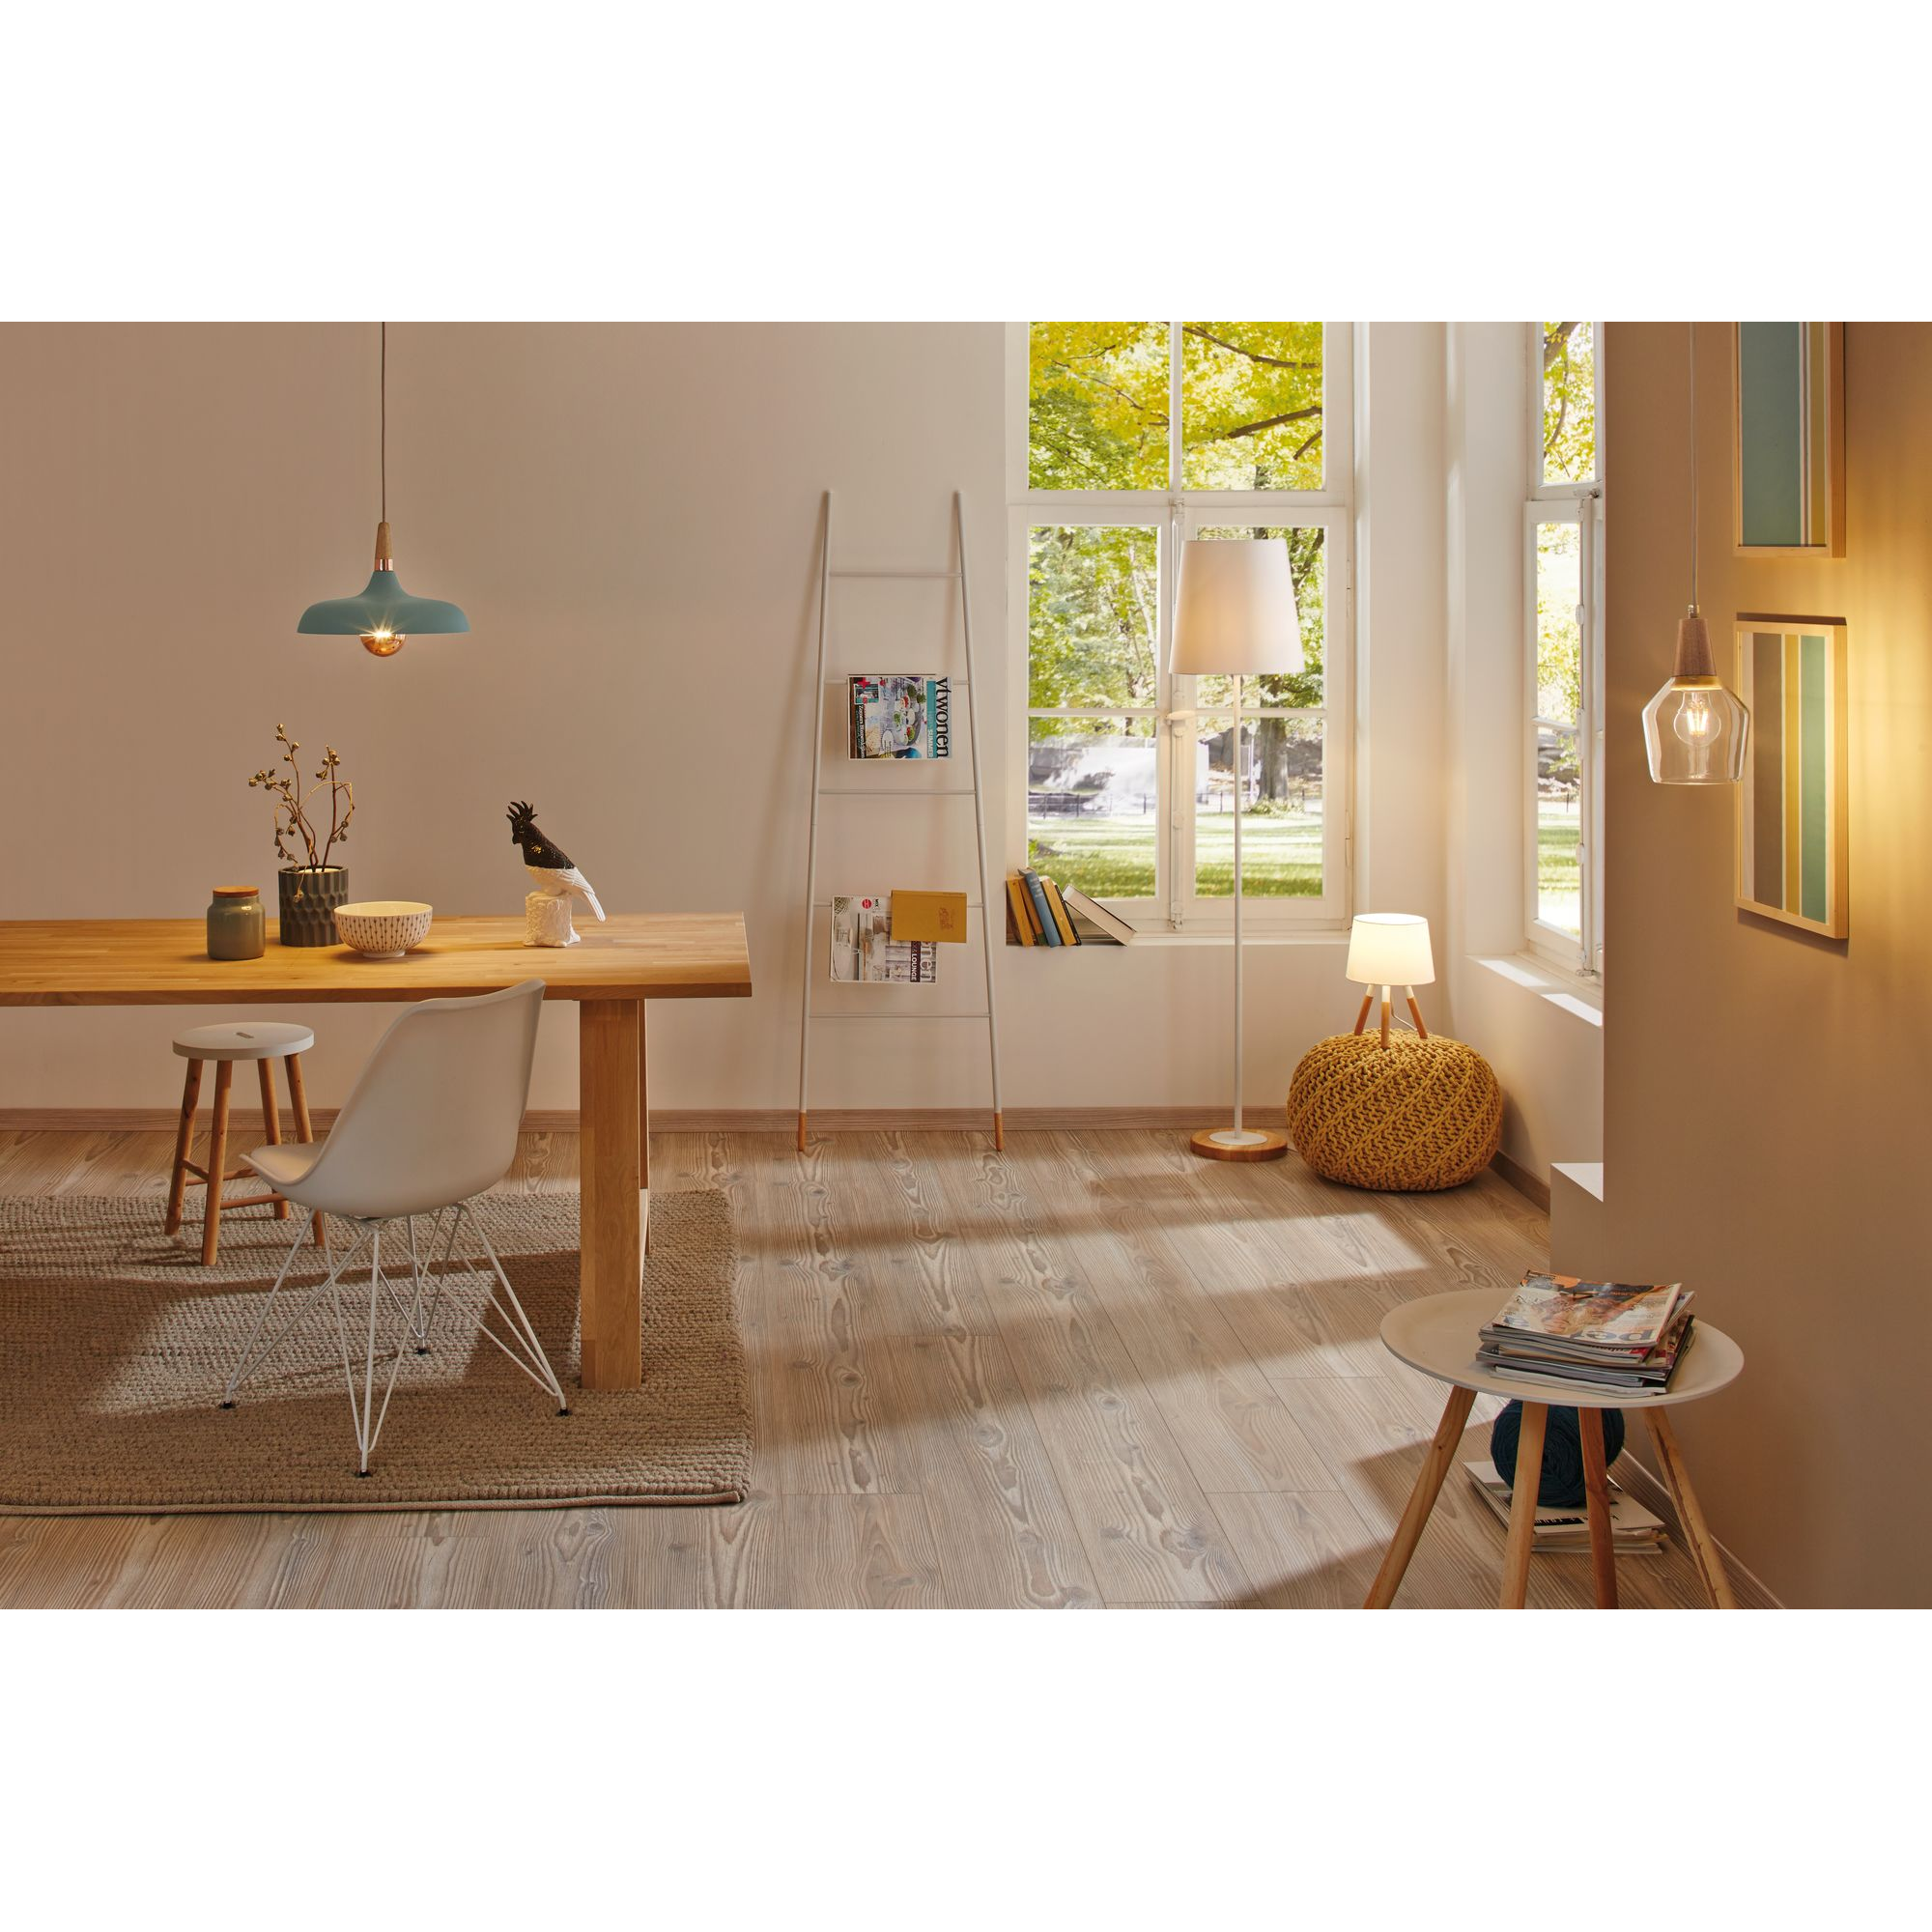 LED-Lampe E27 7,5W (65W) 806 lm warmweiß klar + product picture